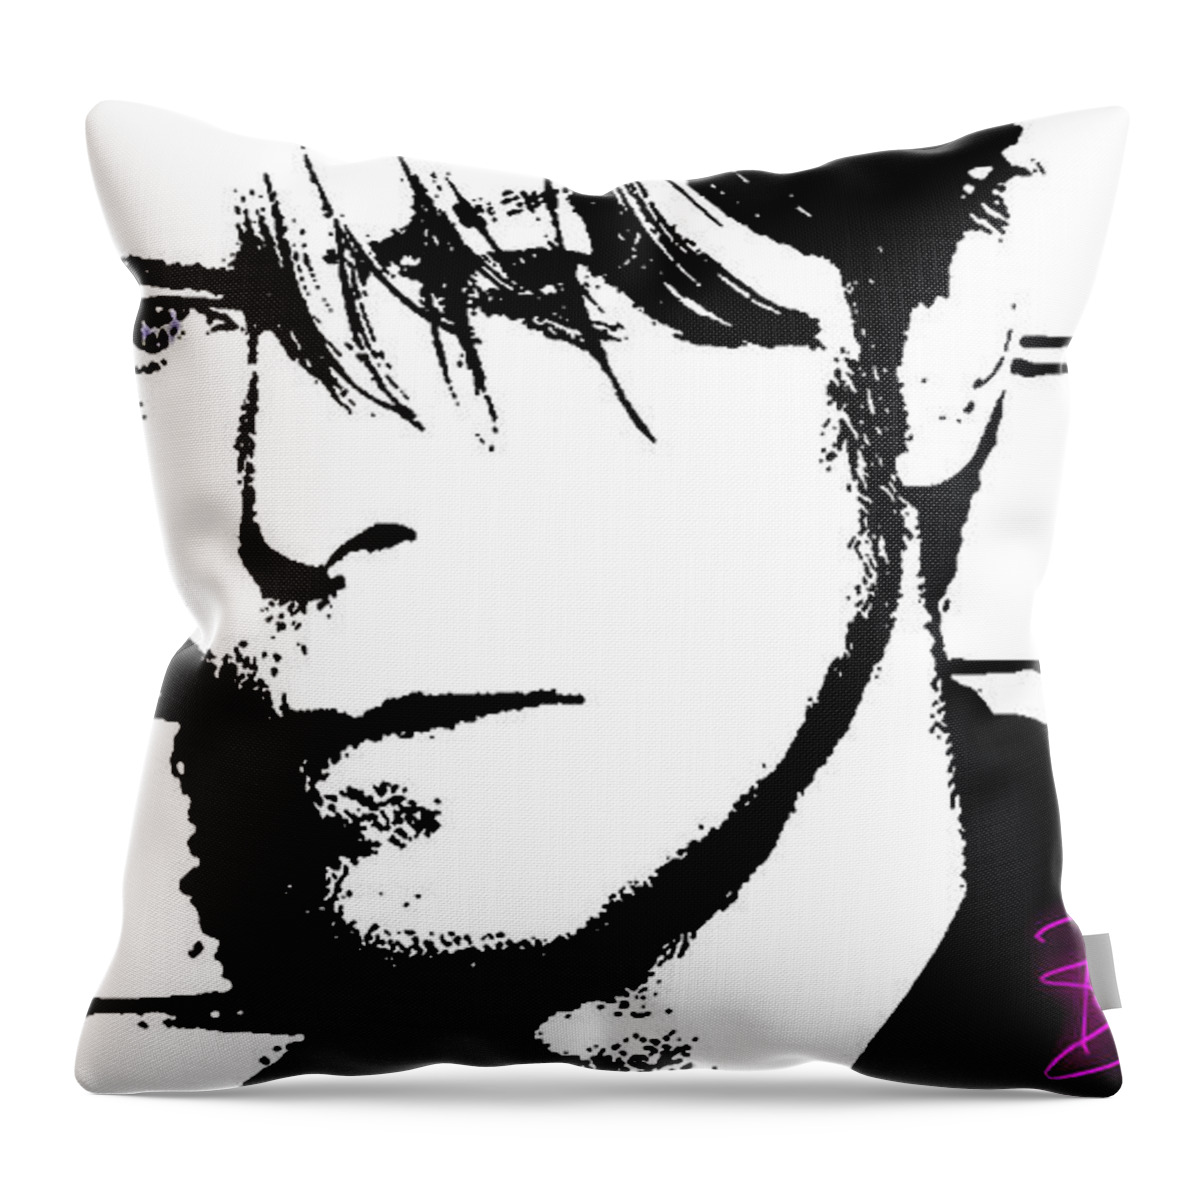 David Bowie Throw Pillow featuring the digital art David Bowie by Sergio Verrecchia